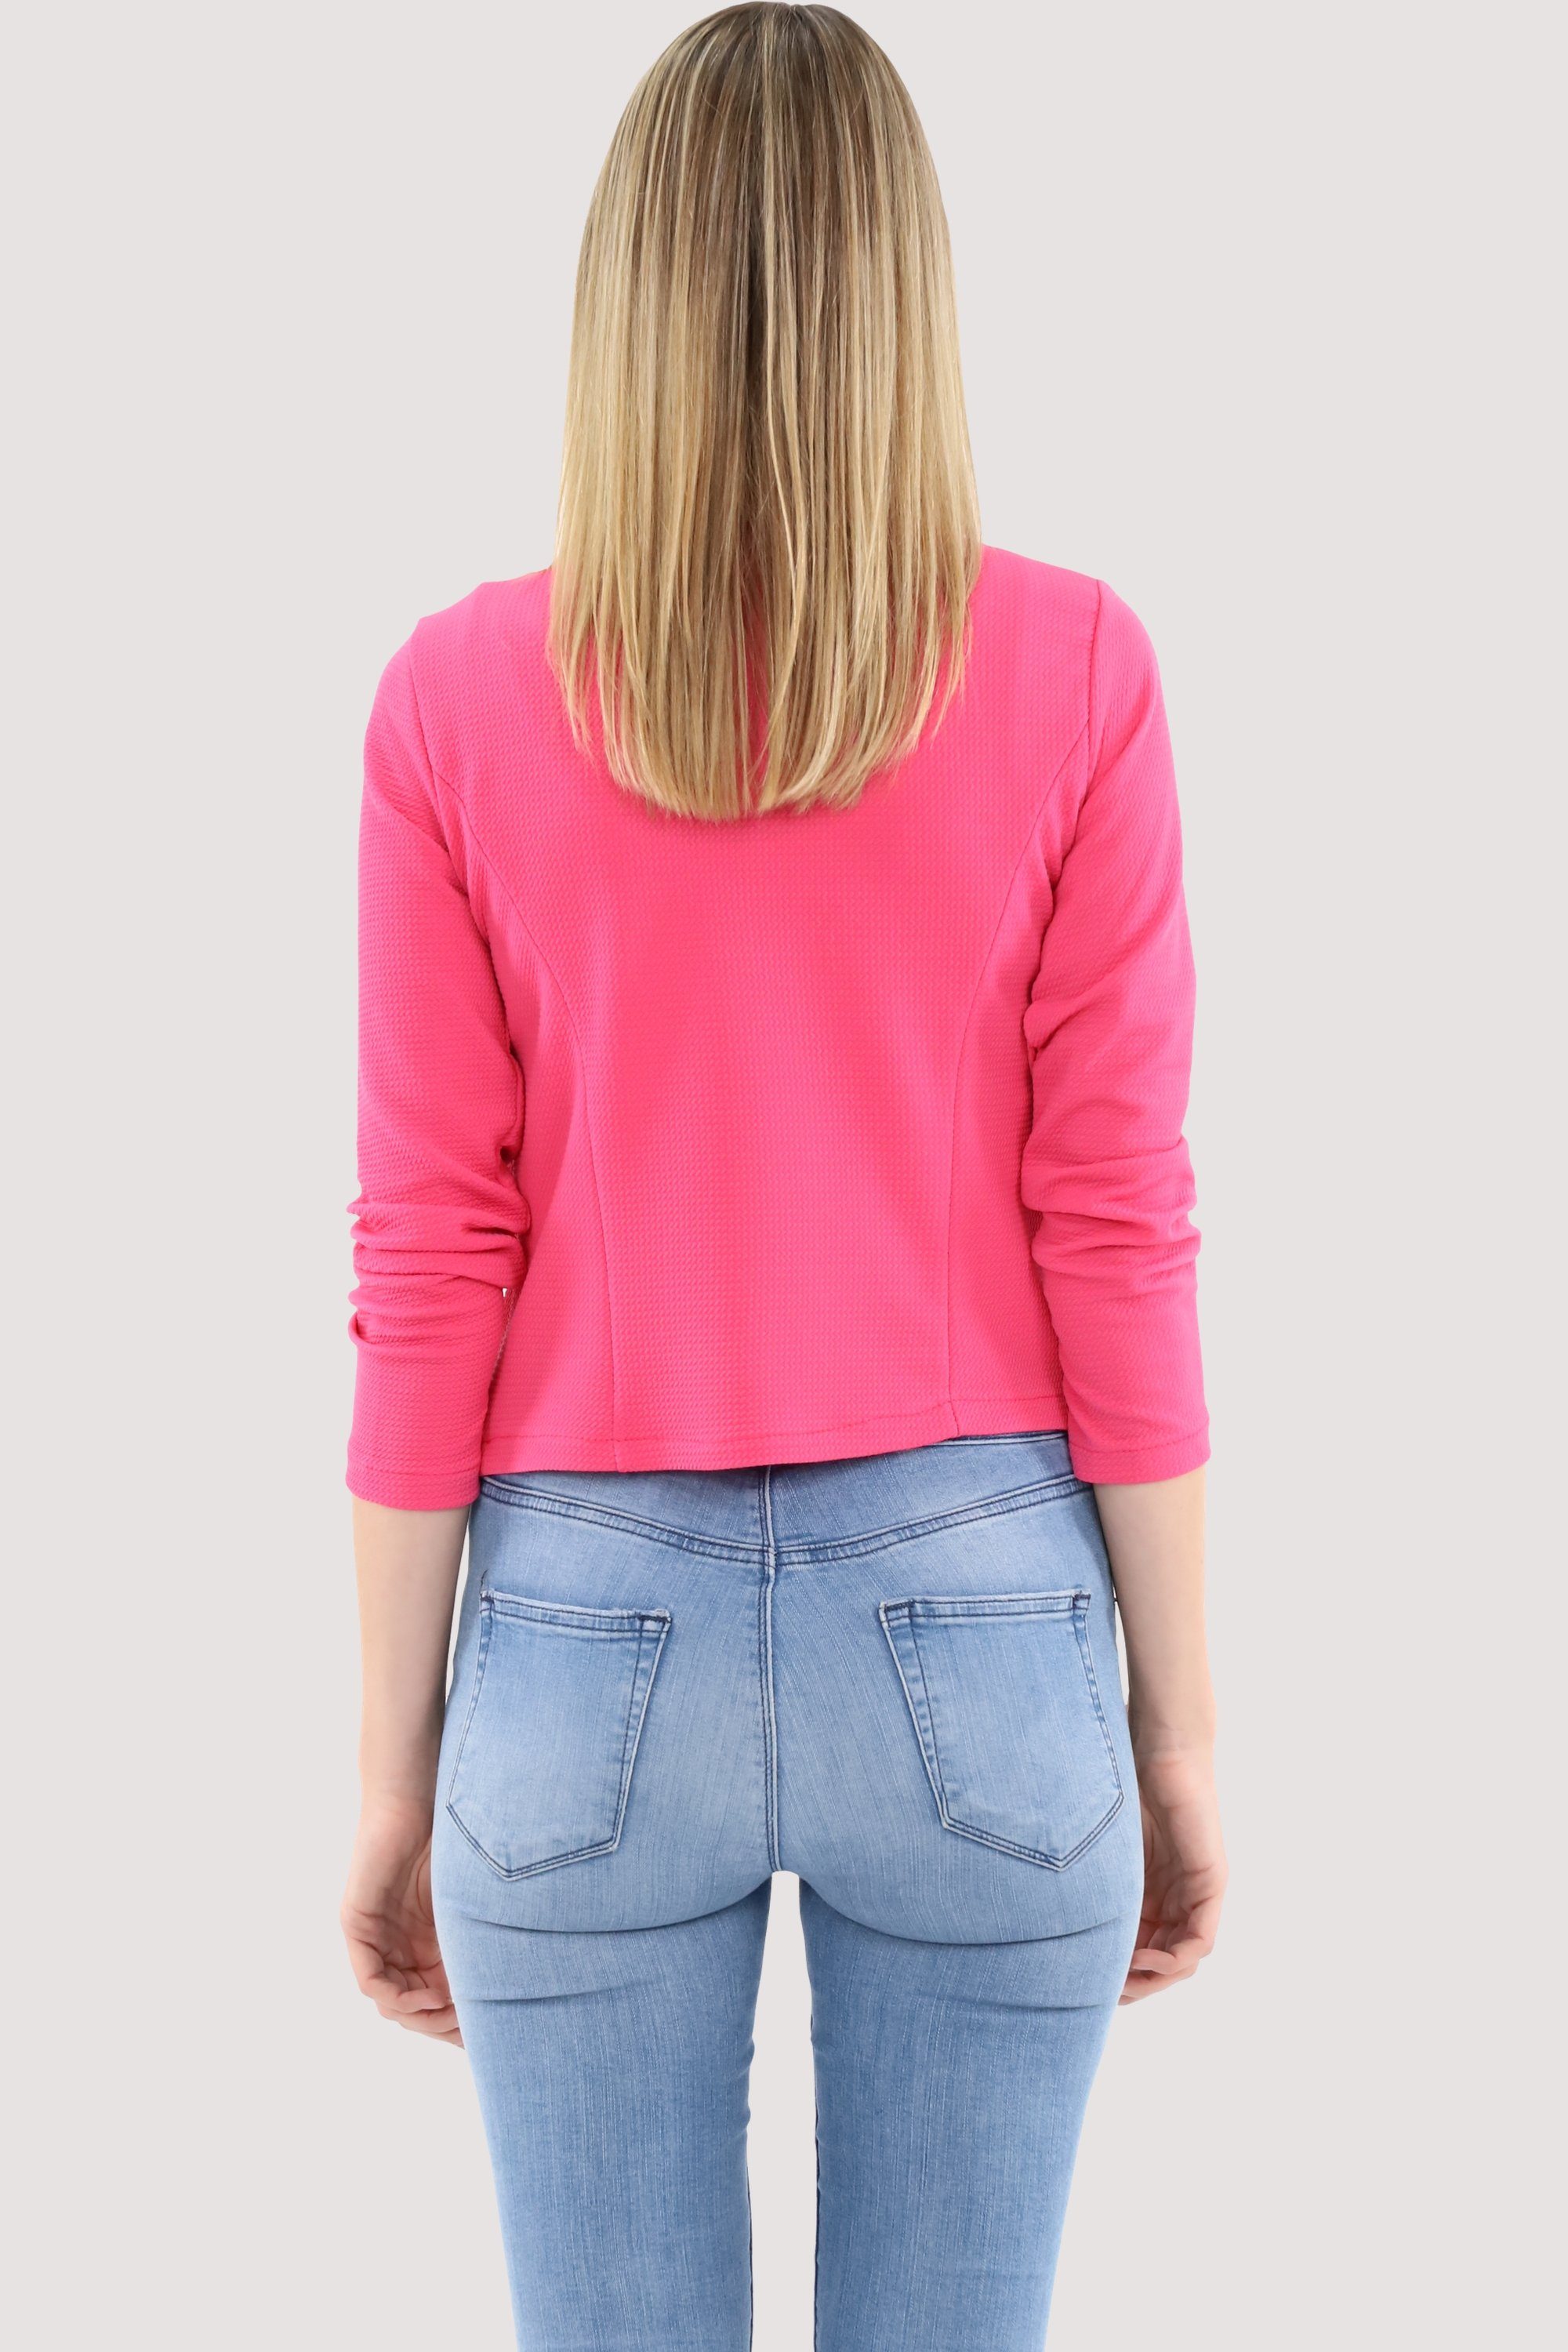 Sweatblazer more im than Basic-Look pink Jackenblazer 6040 fashion malito